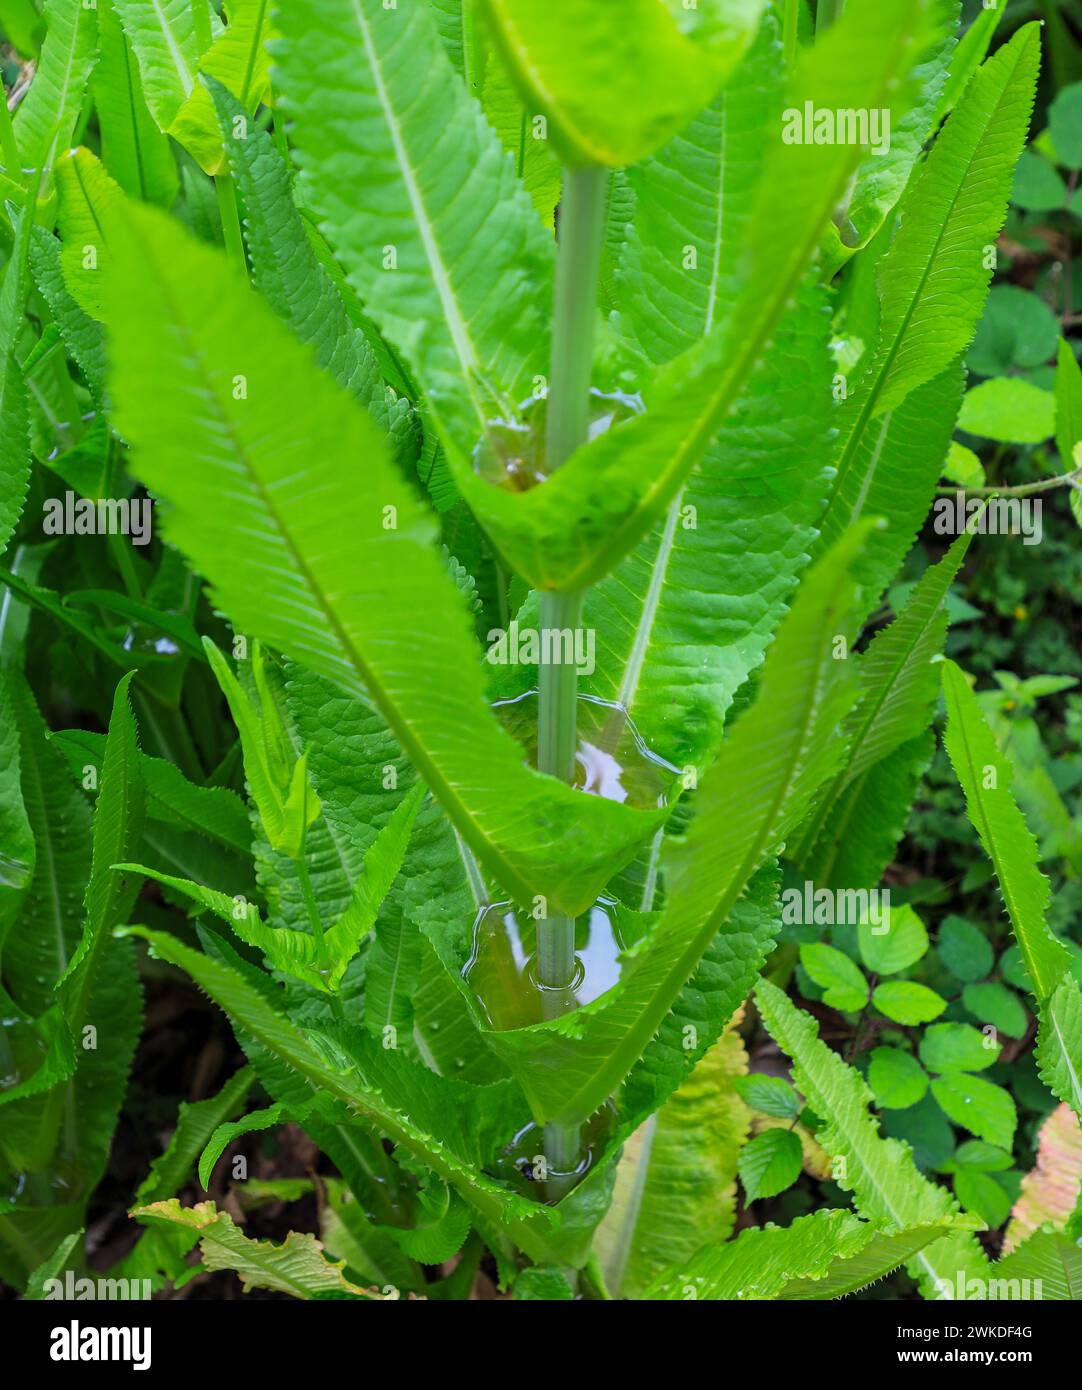 Acqua piovana depositata nelle foglie e nei fusti di una pianta di Teasel, Teazel o Teazle (Dipsacus fullonum), Inghilterra, Regno Unito Foto Stock